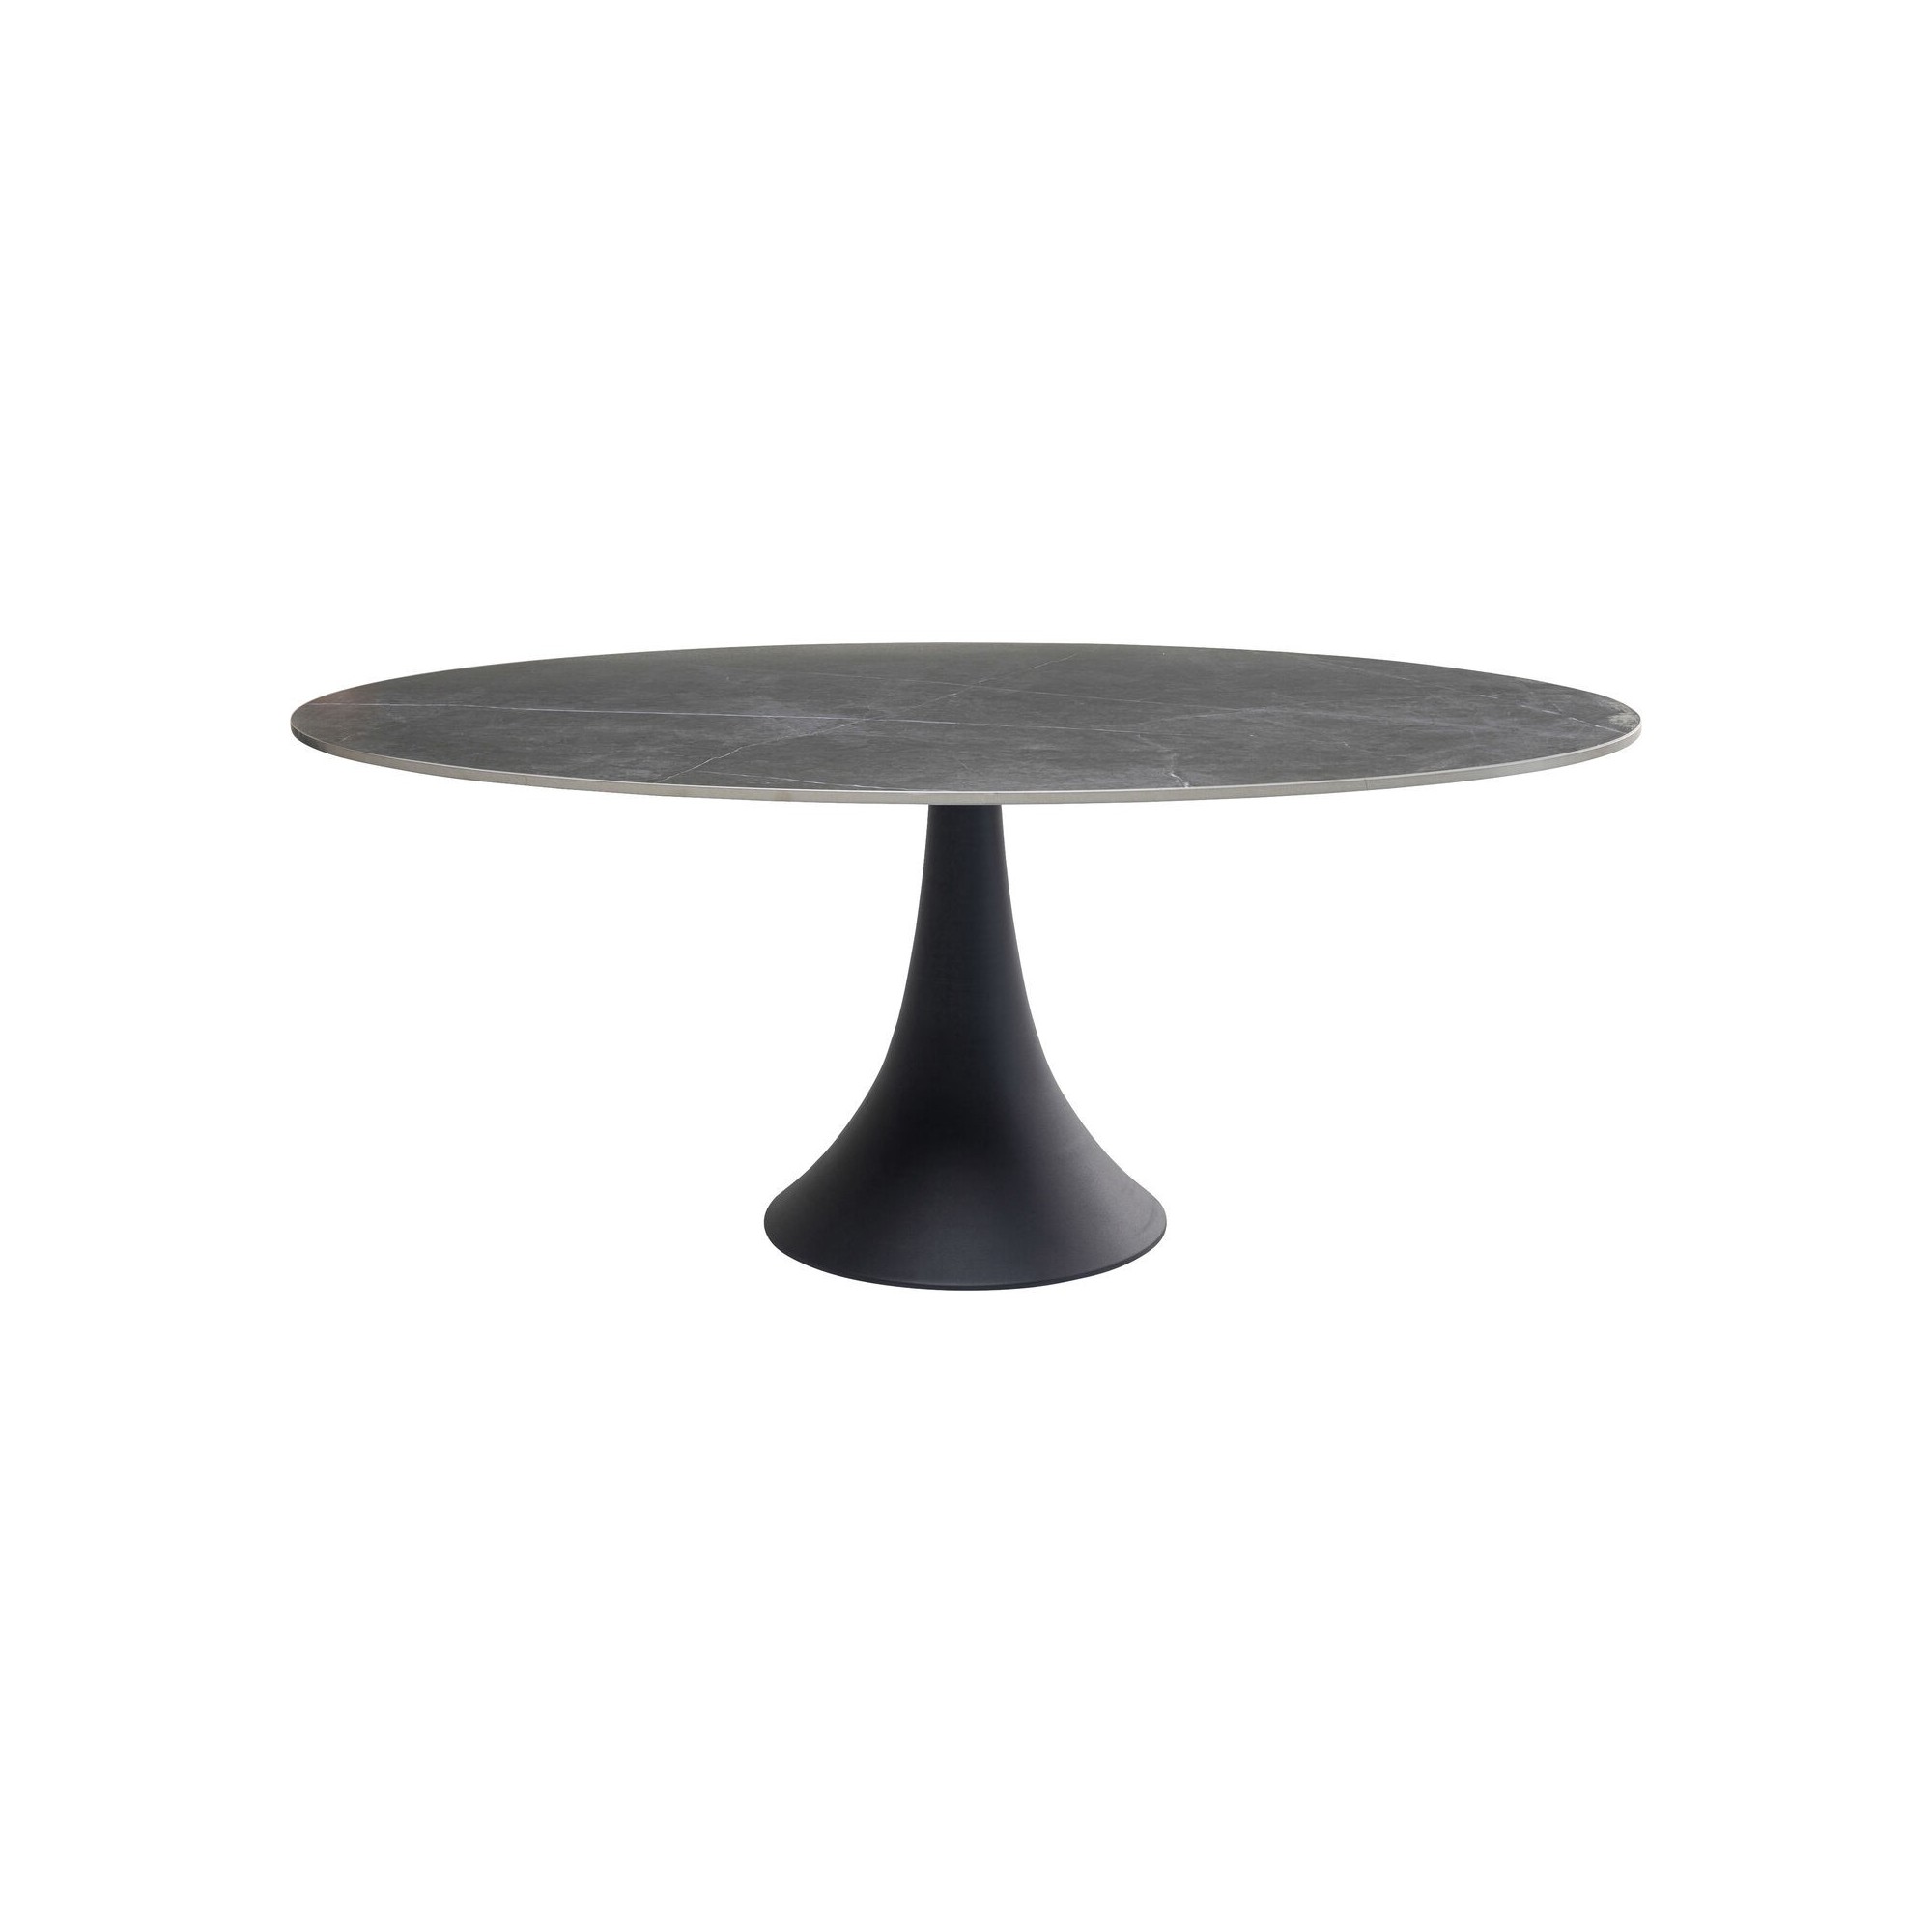 Table Grande Possibilita noir 180x120cm